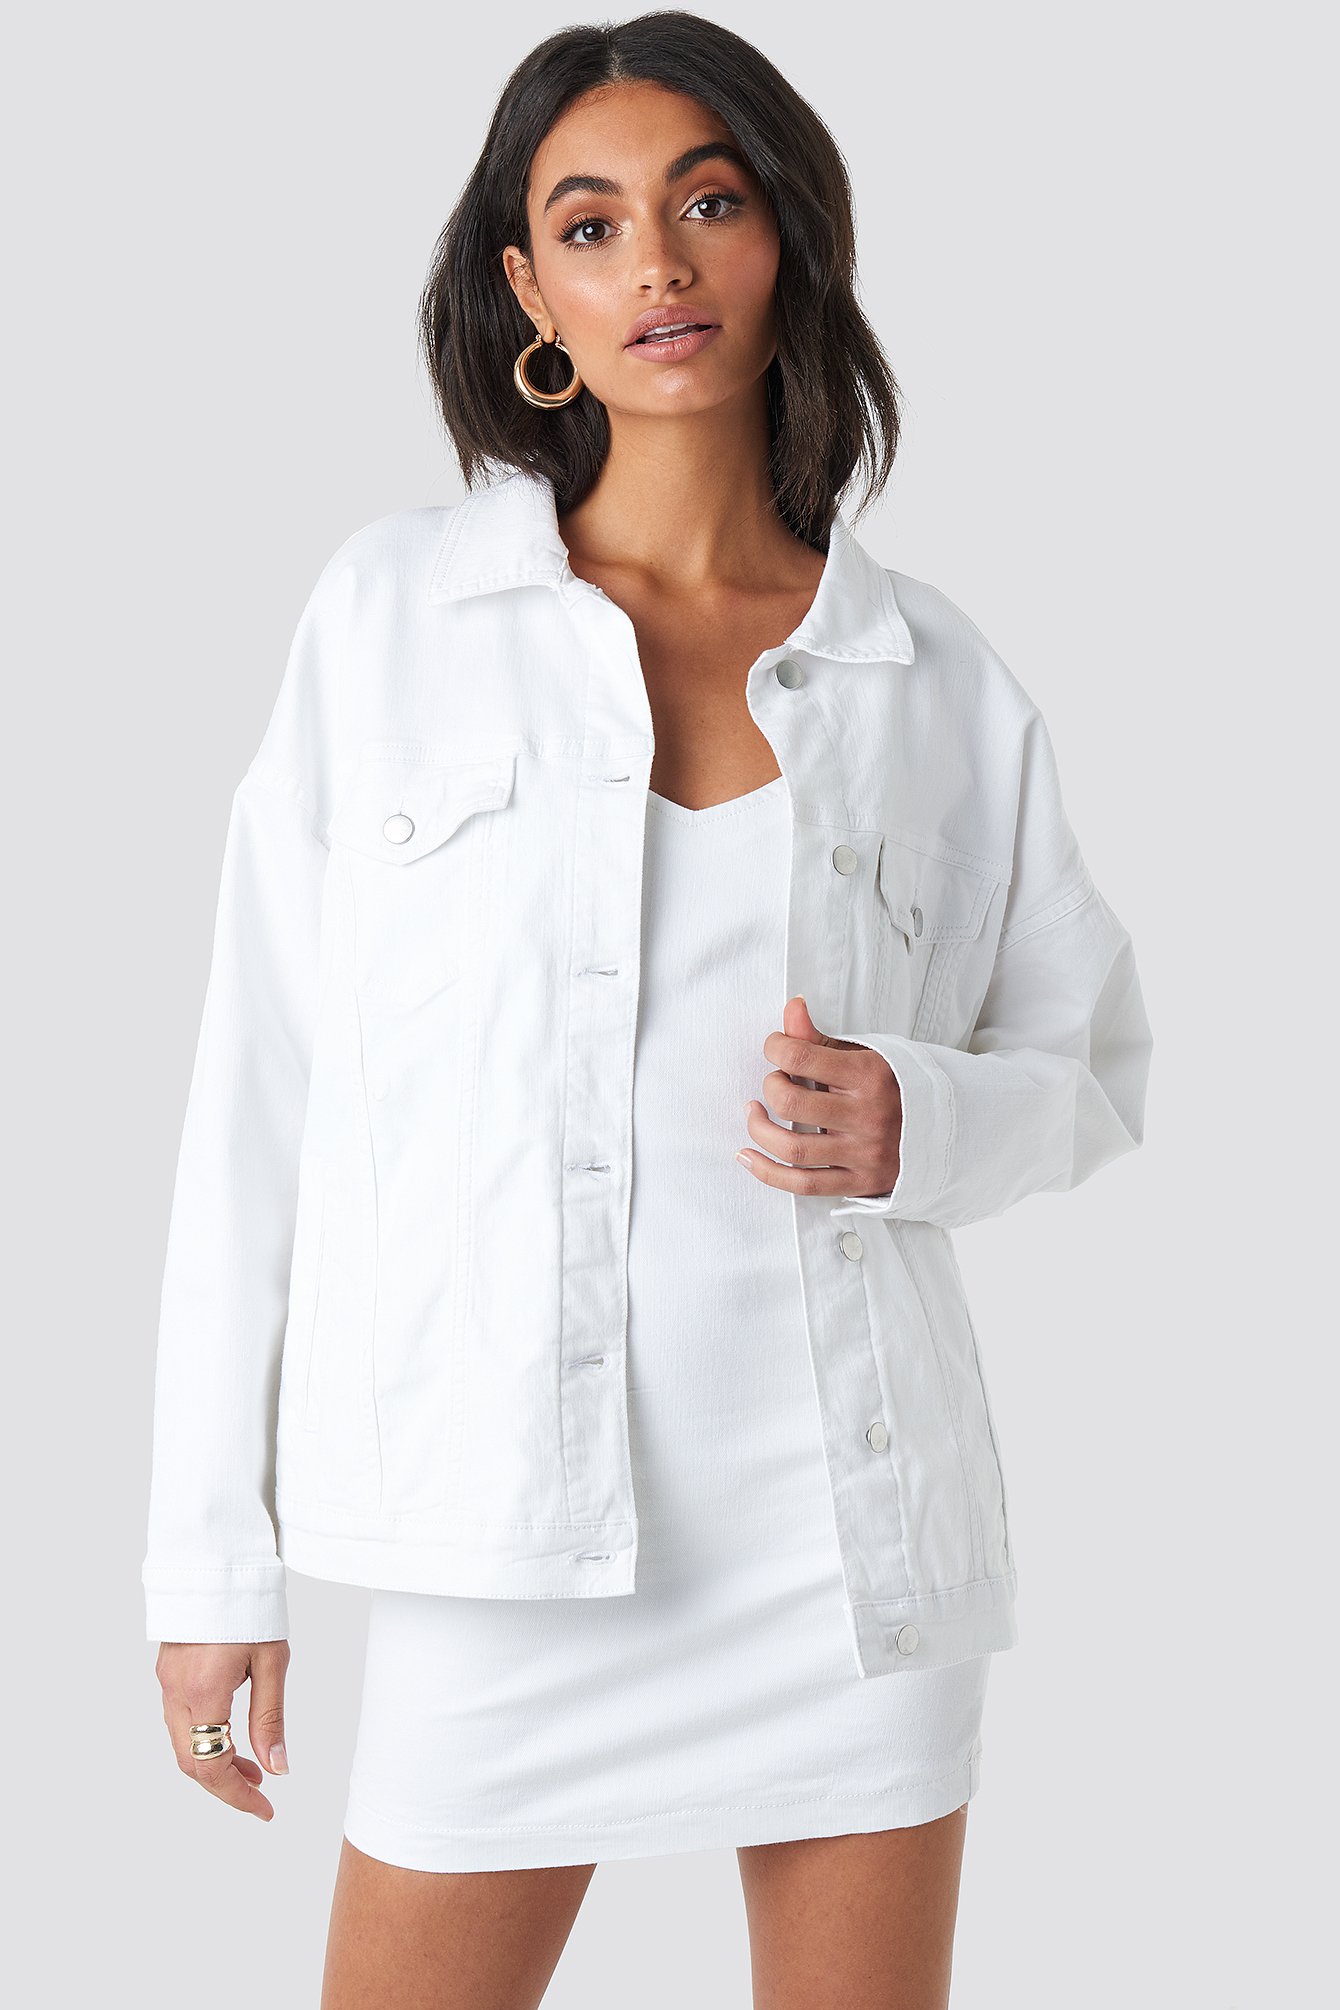 long white denim jacket